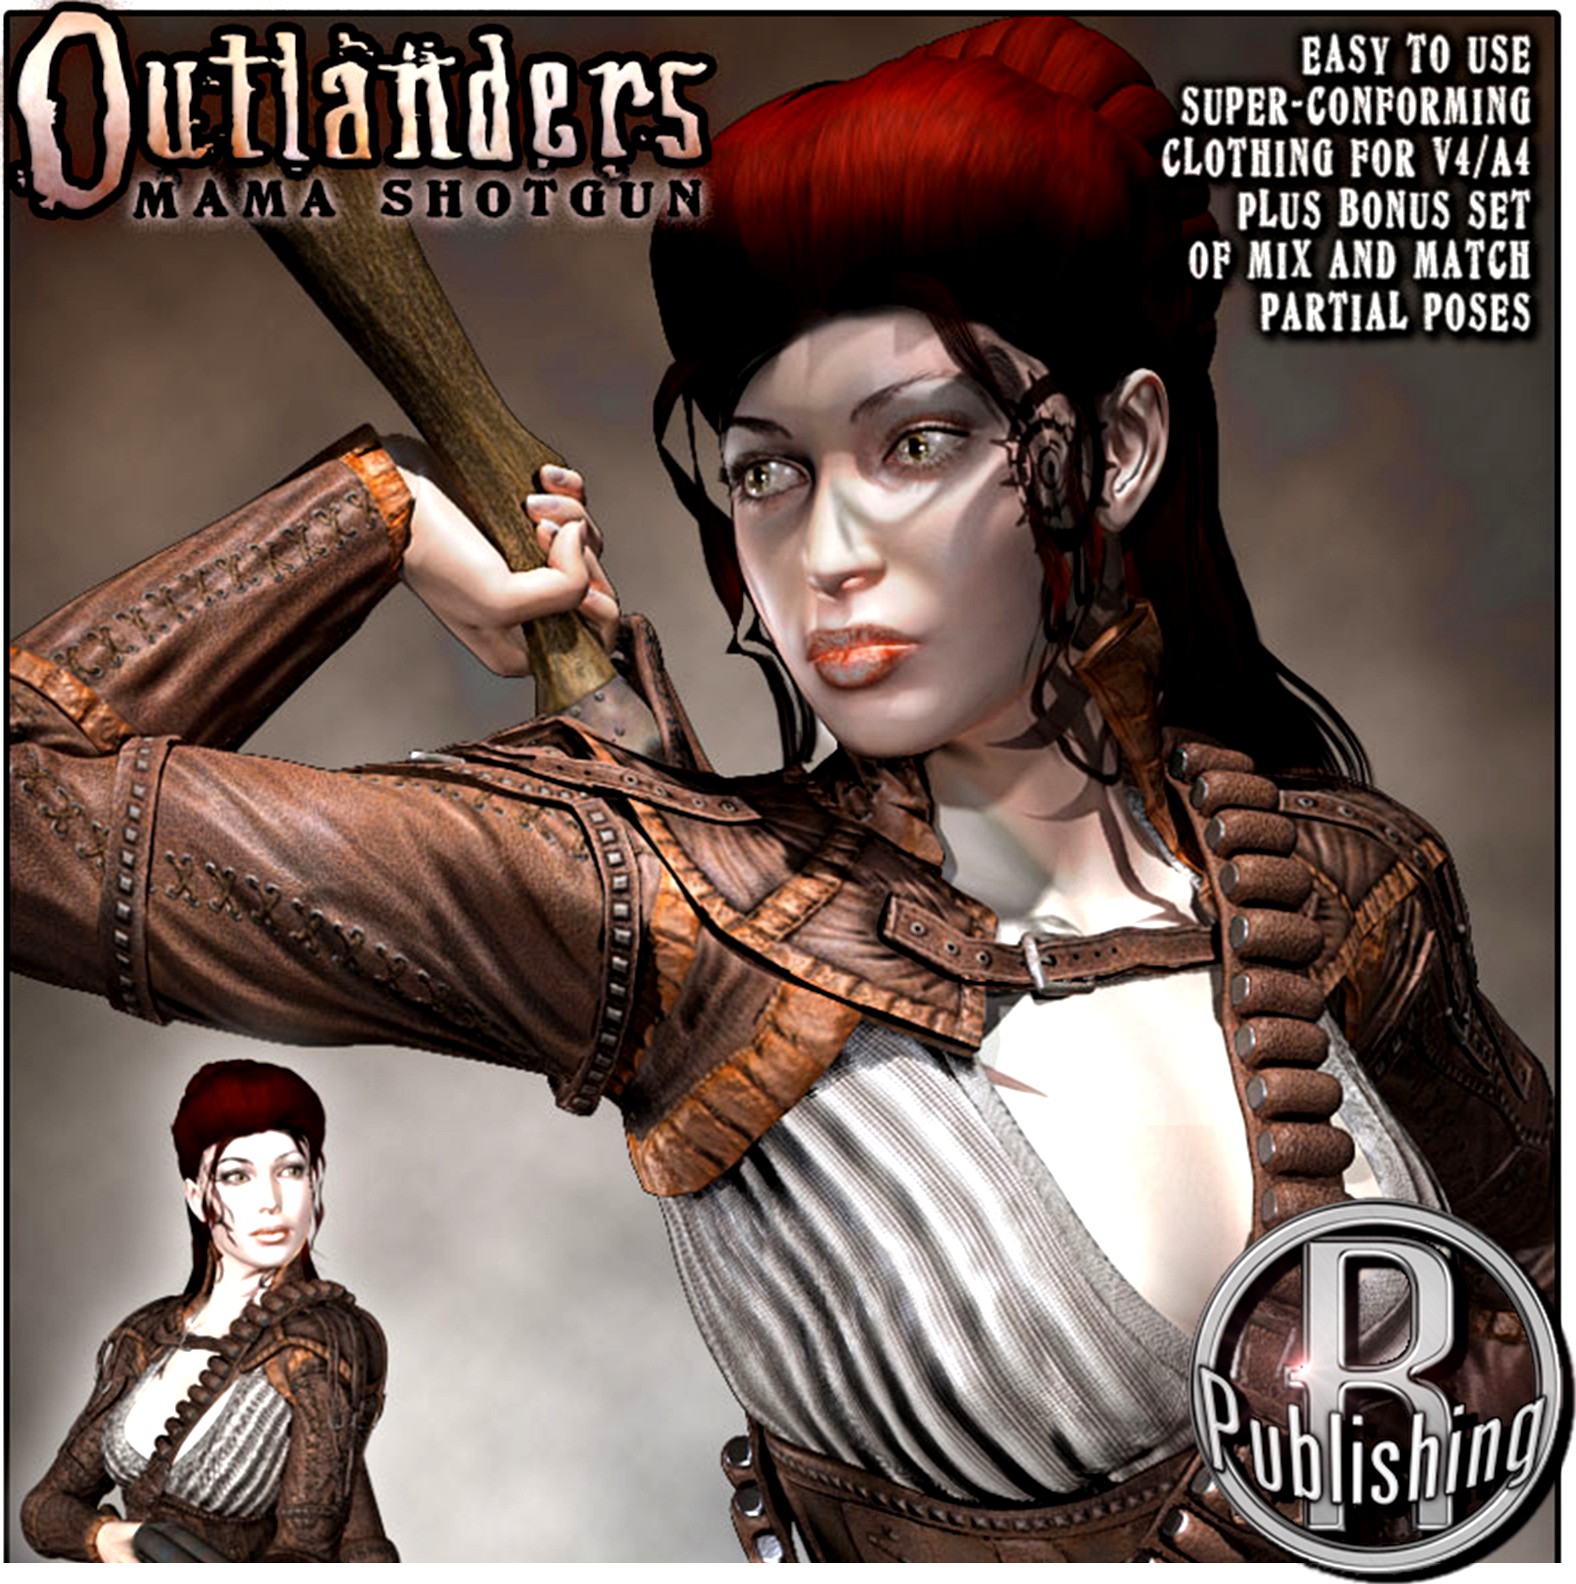 Outlanders: Mama Shotgun